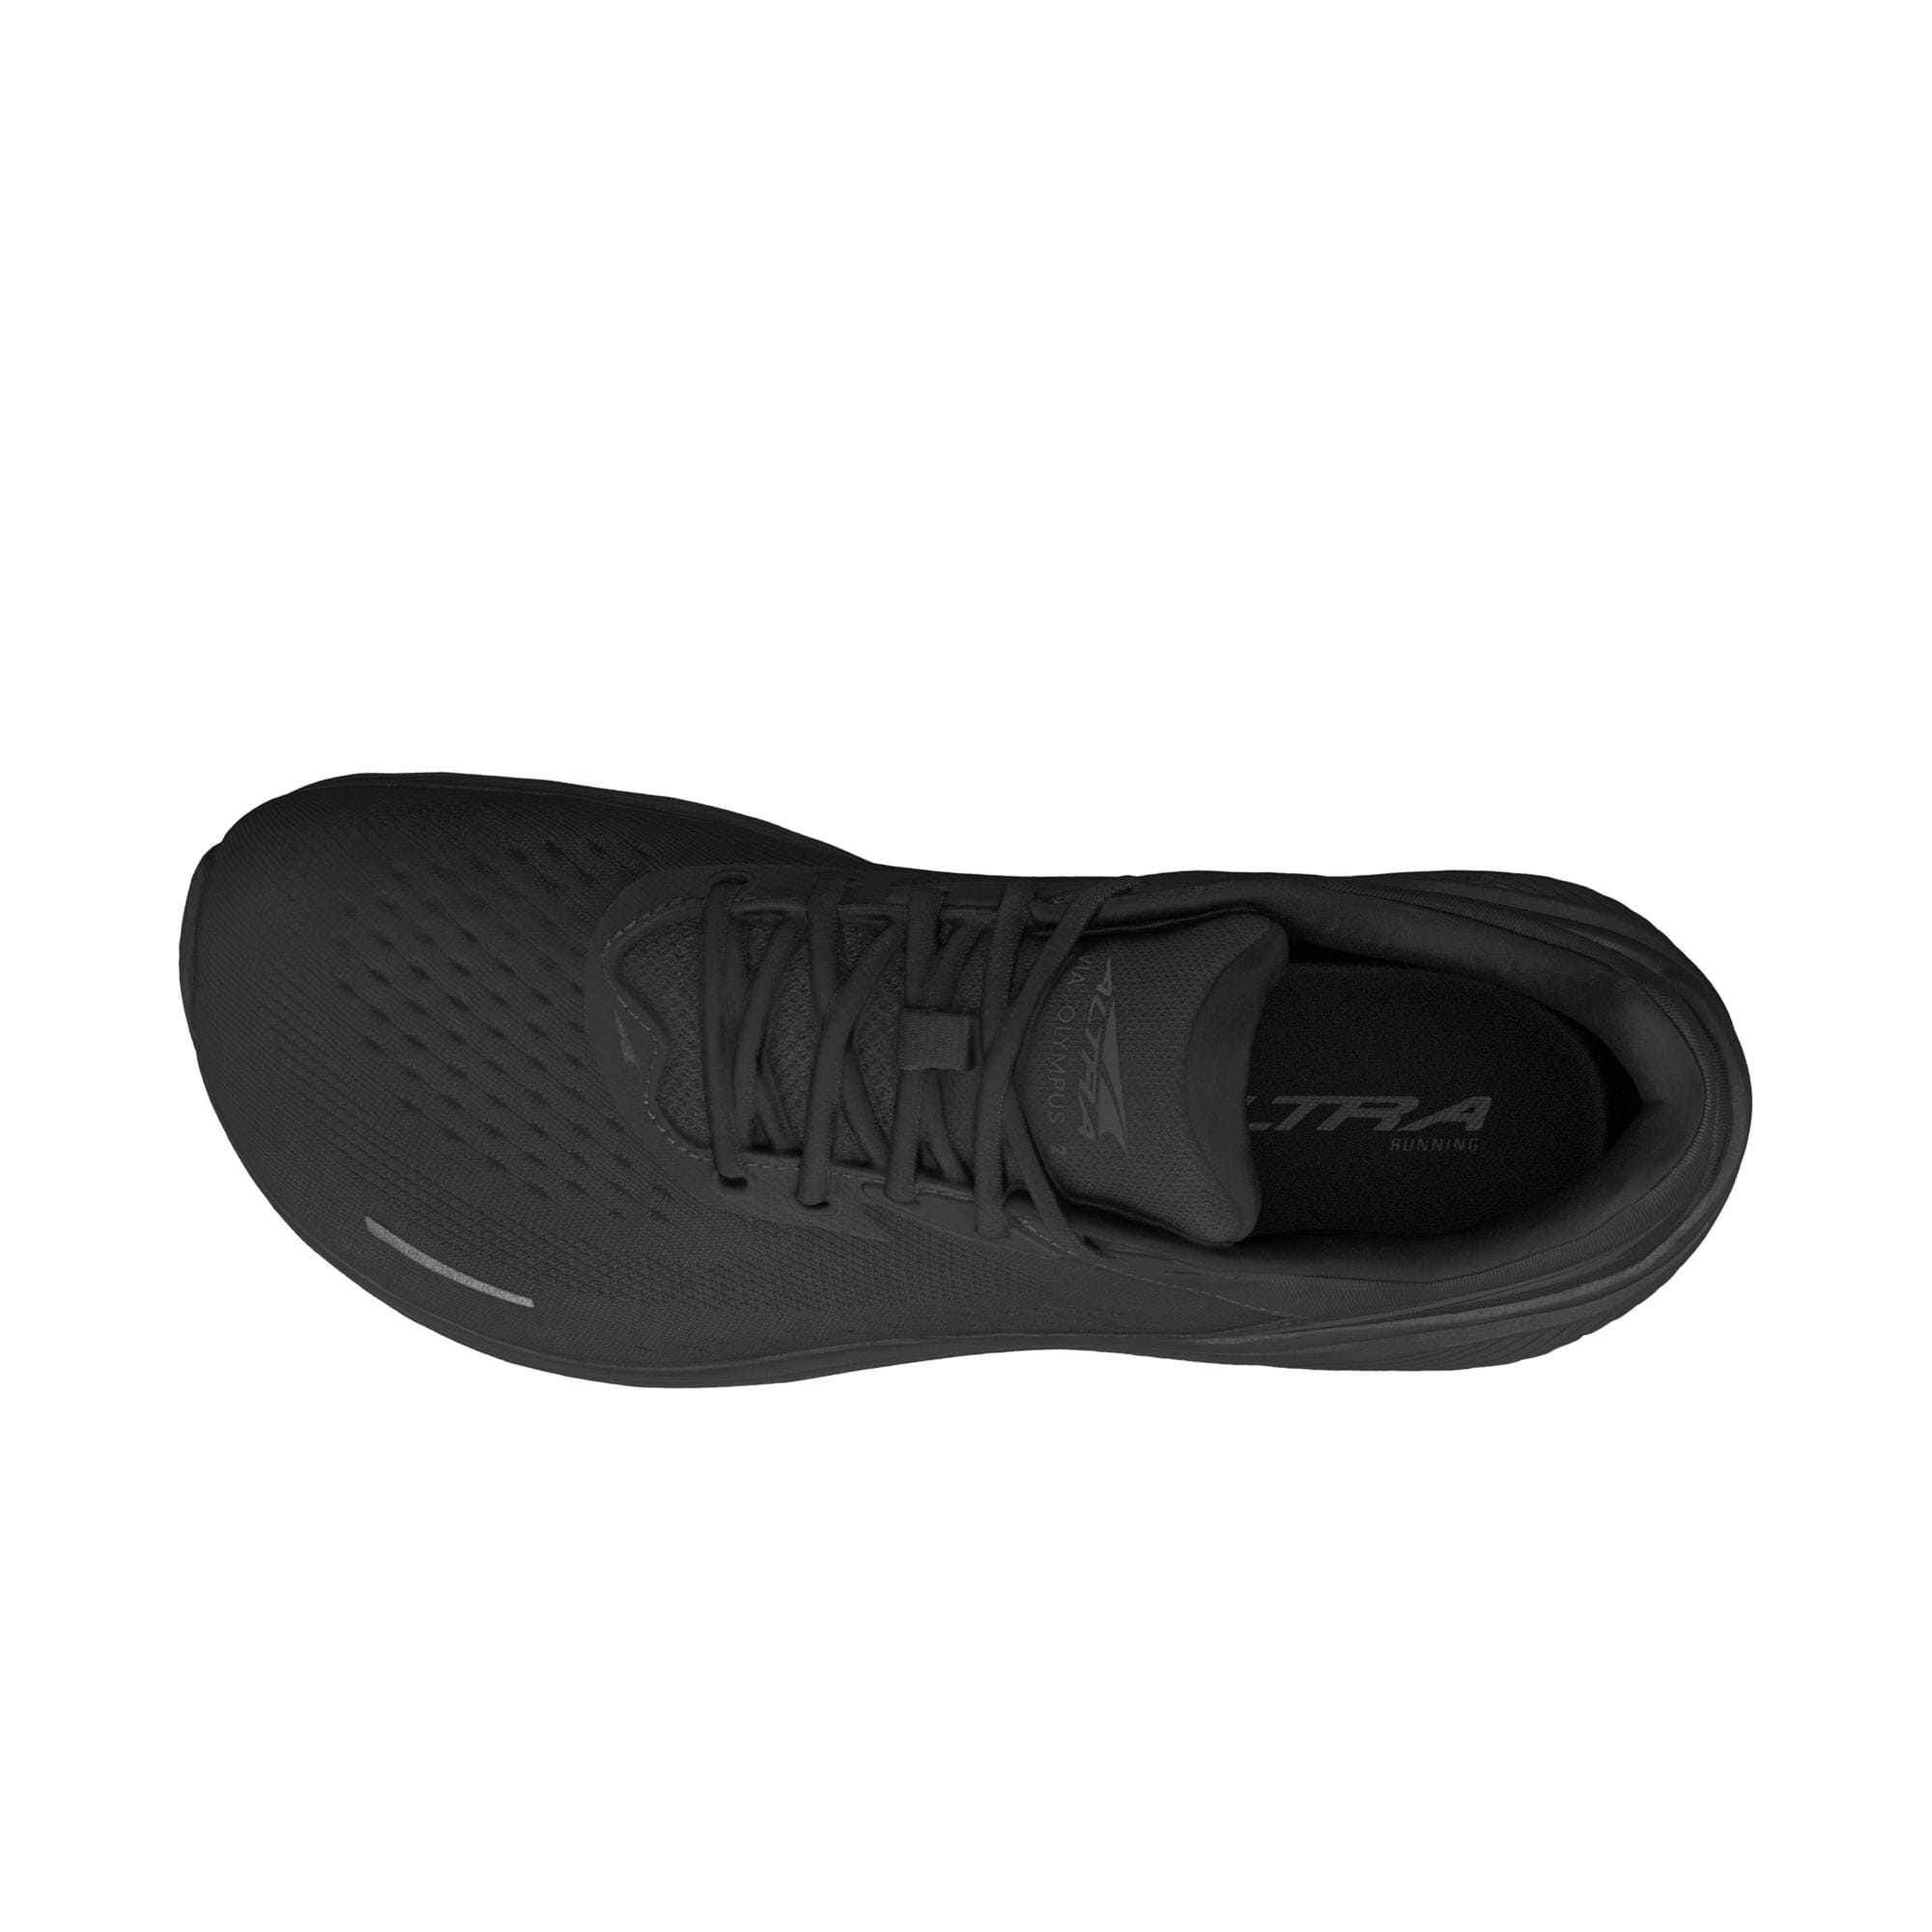 Altra Men's VIA Olympus 2 Road Running Shoes Black US 8 | EUR 41 | UK 7 